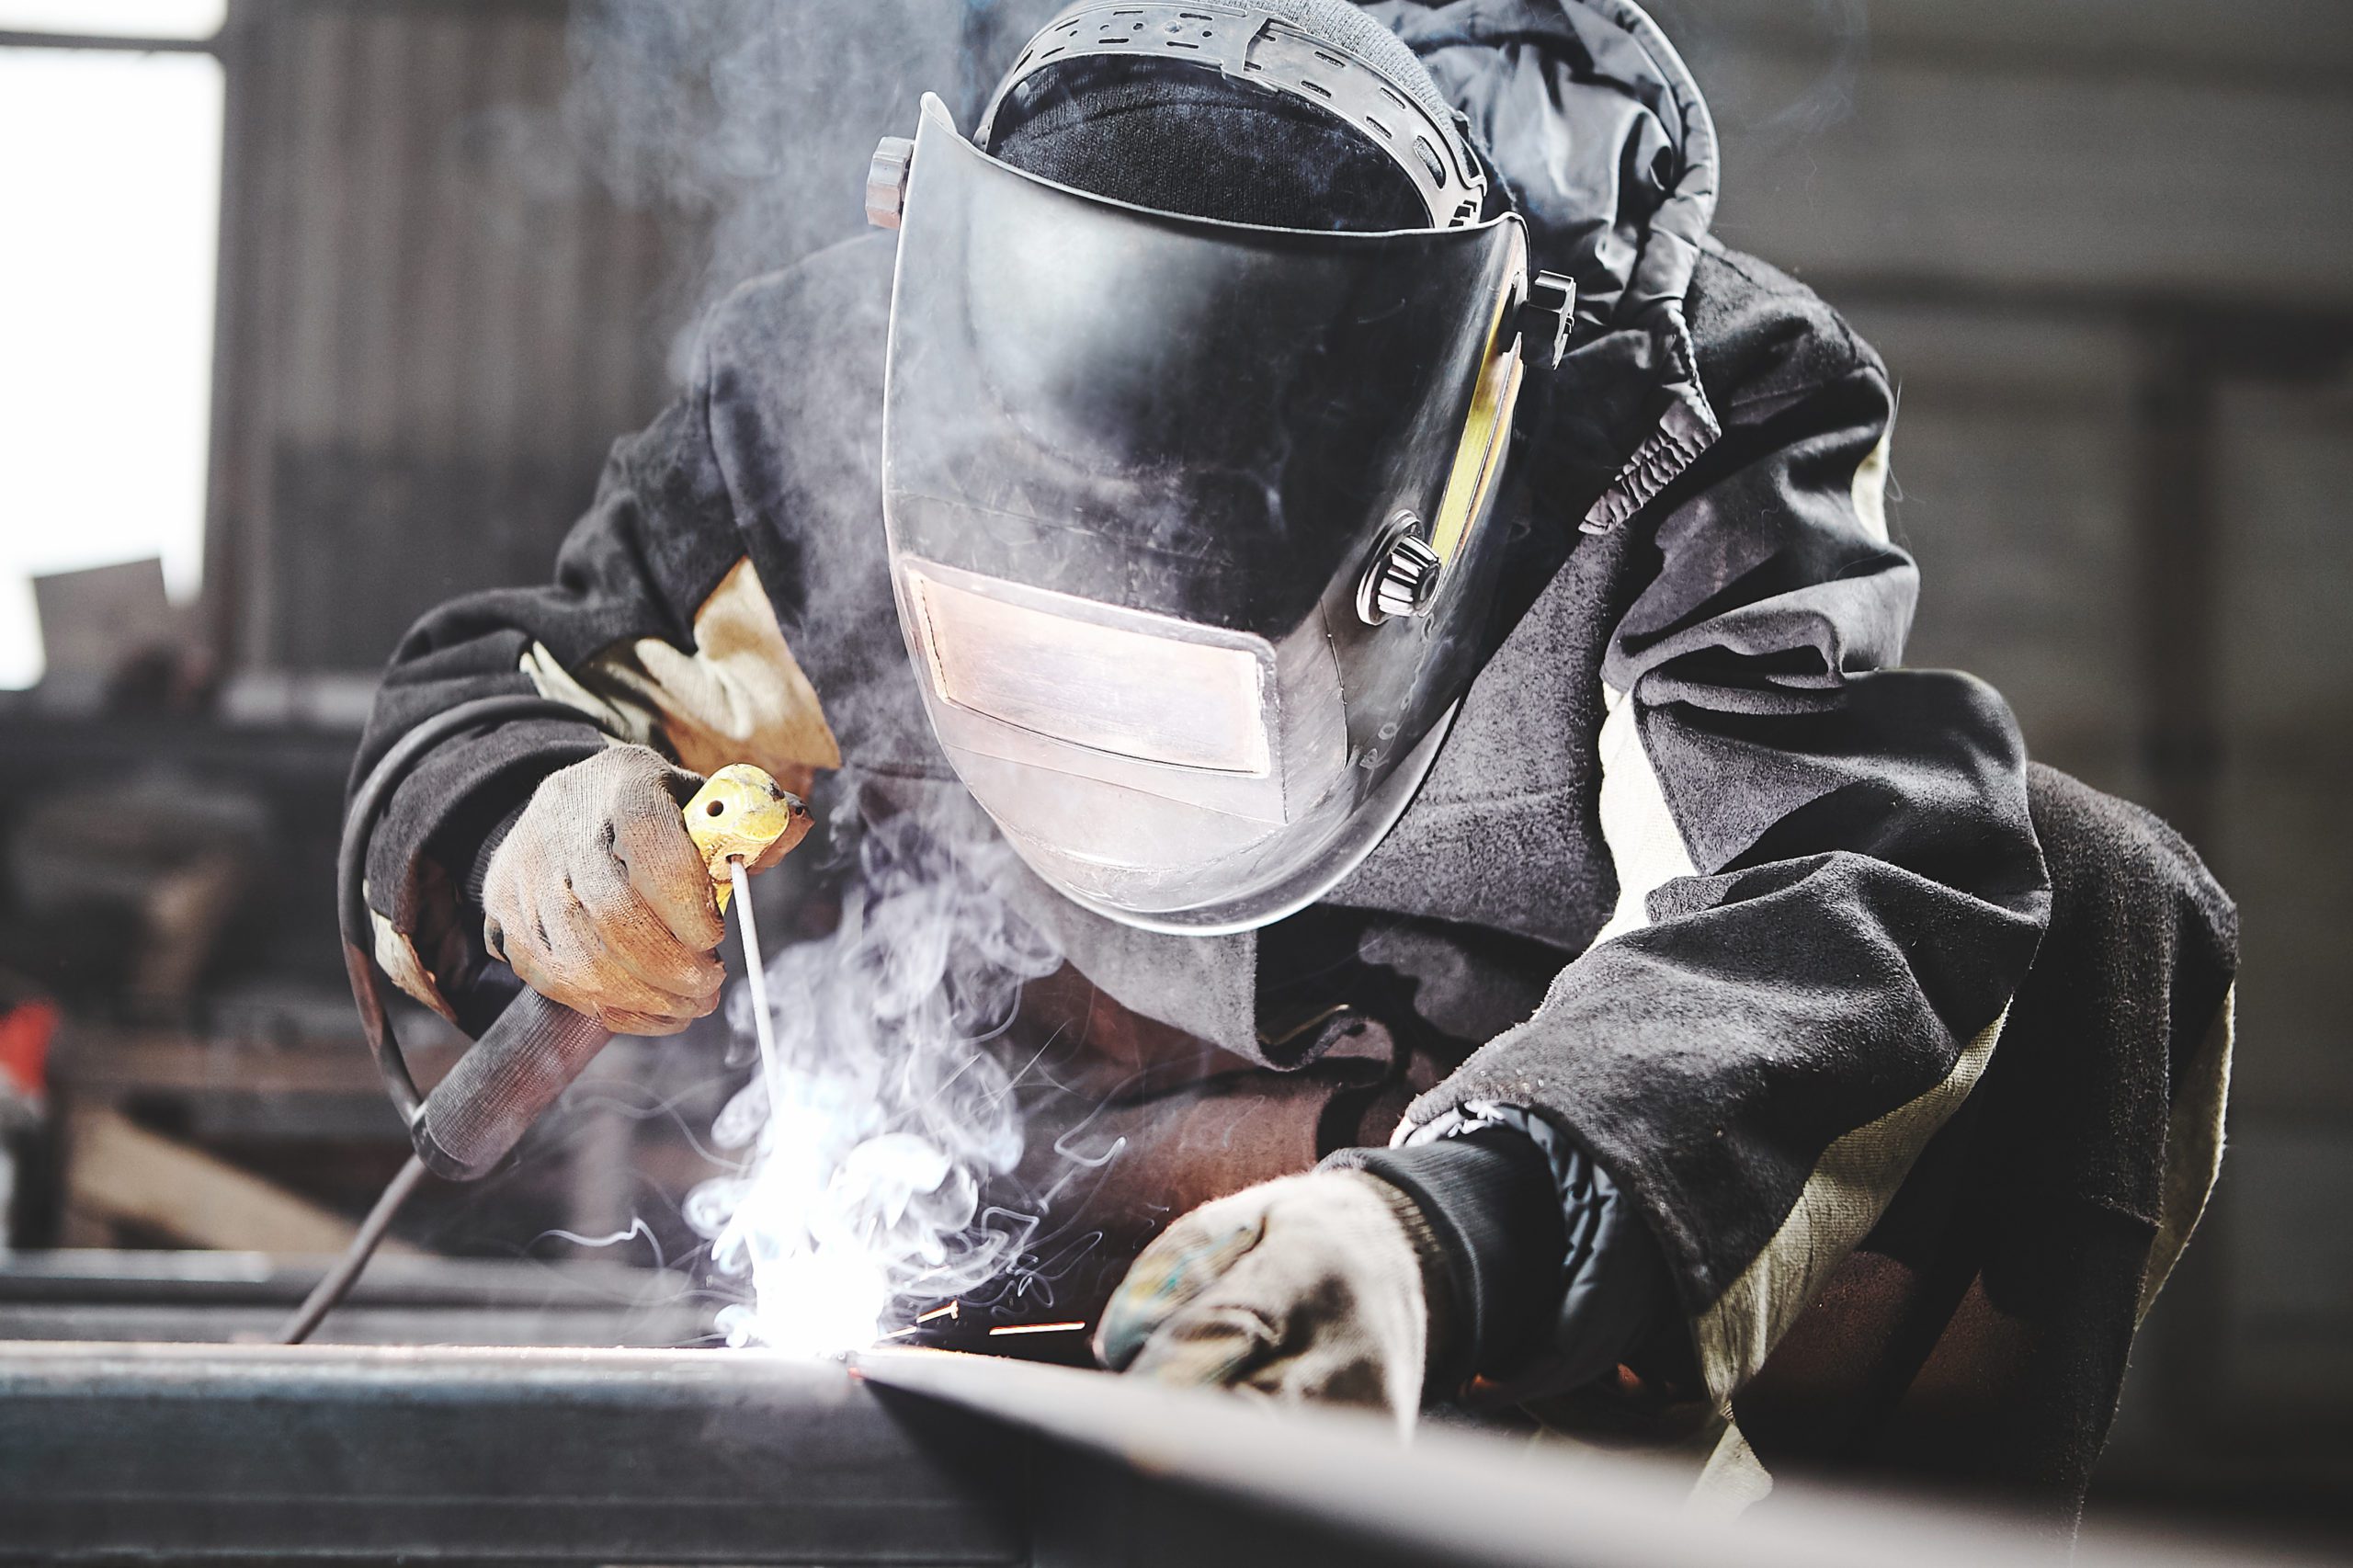 Welder working with welding on metal frames in an industrial plant. Industrial work.